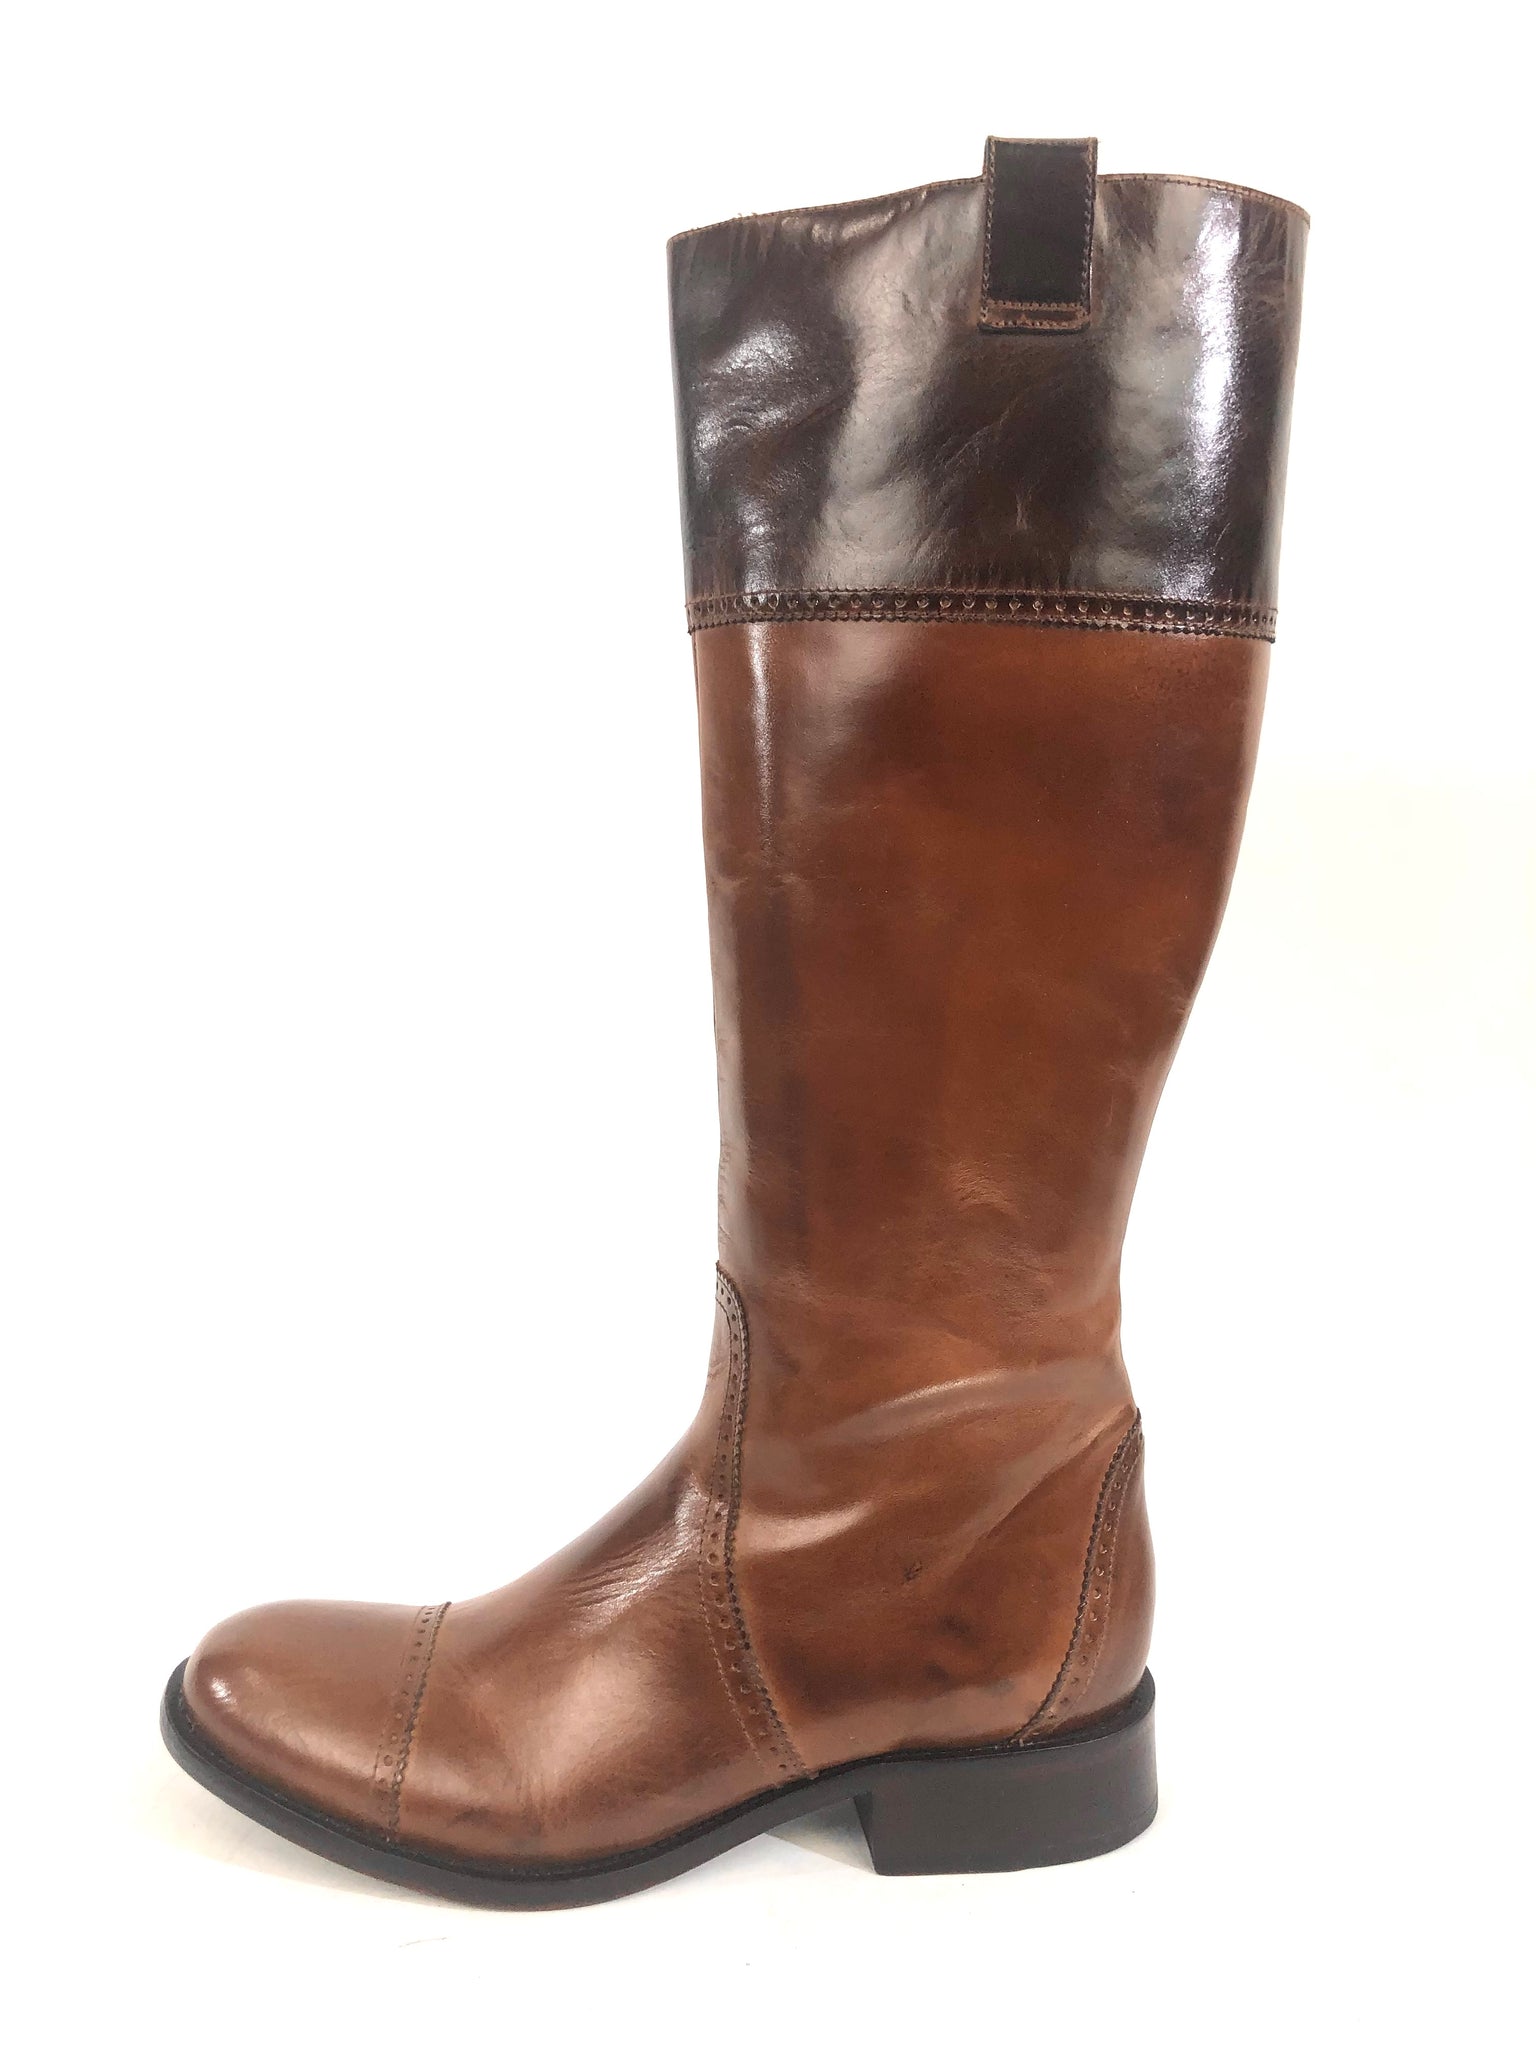 Tan and Mahogany Collard English Style Riding Boots | Size 8B